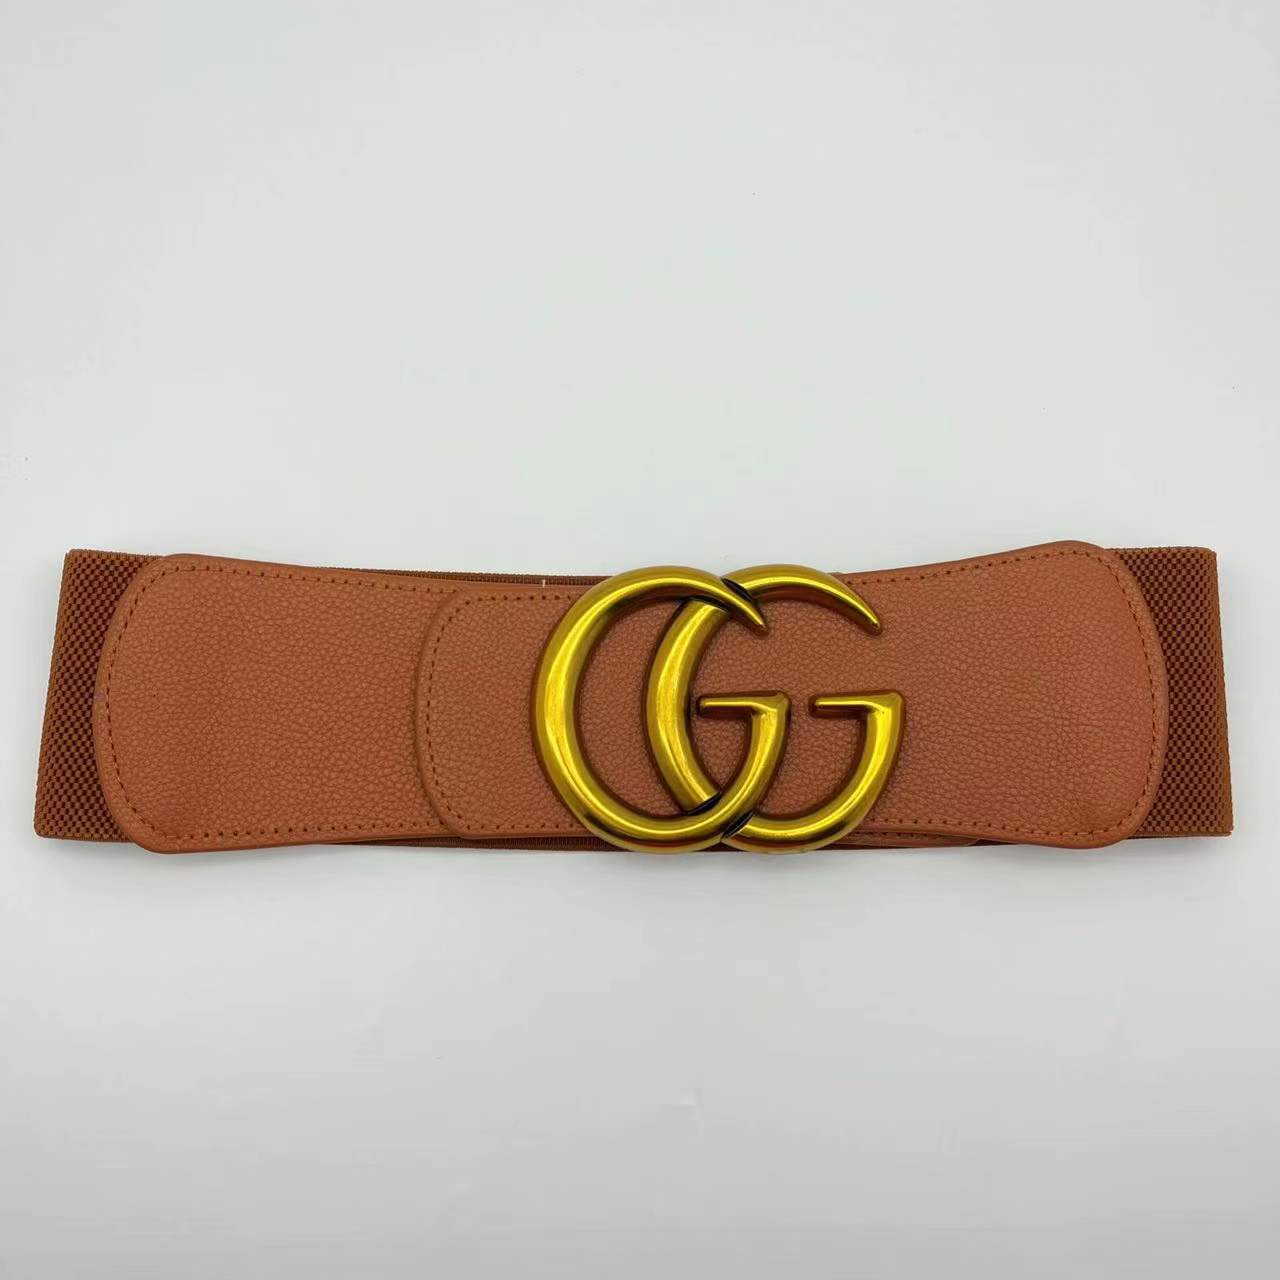 GG Gucci Elastic waist tape/Belt